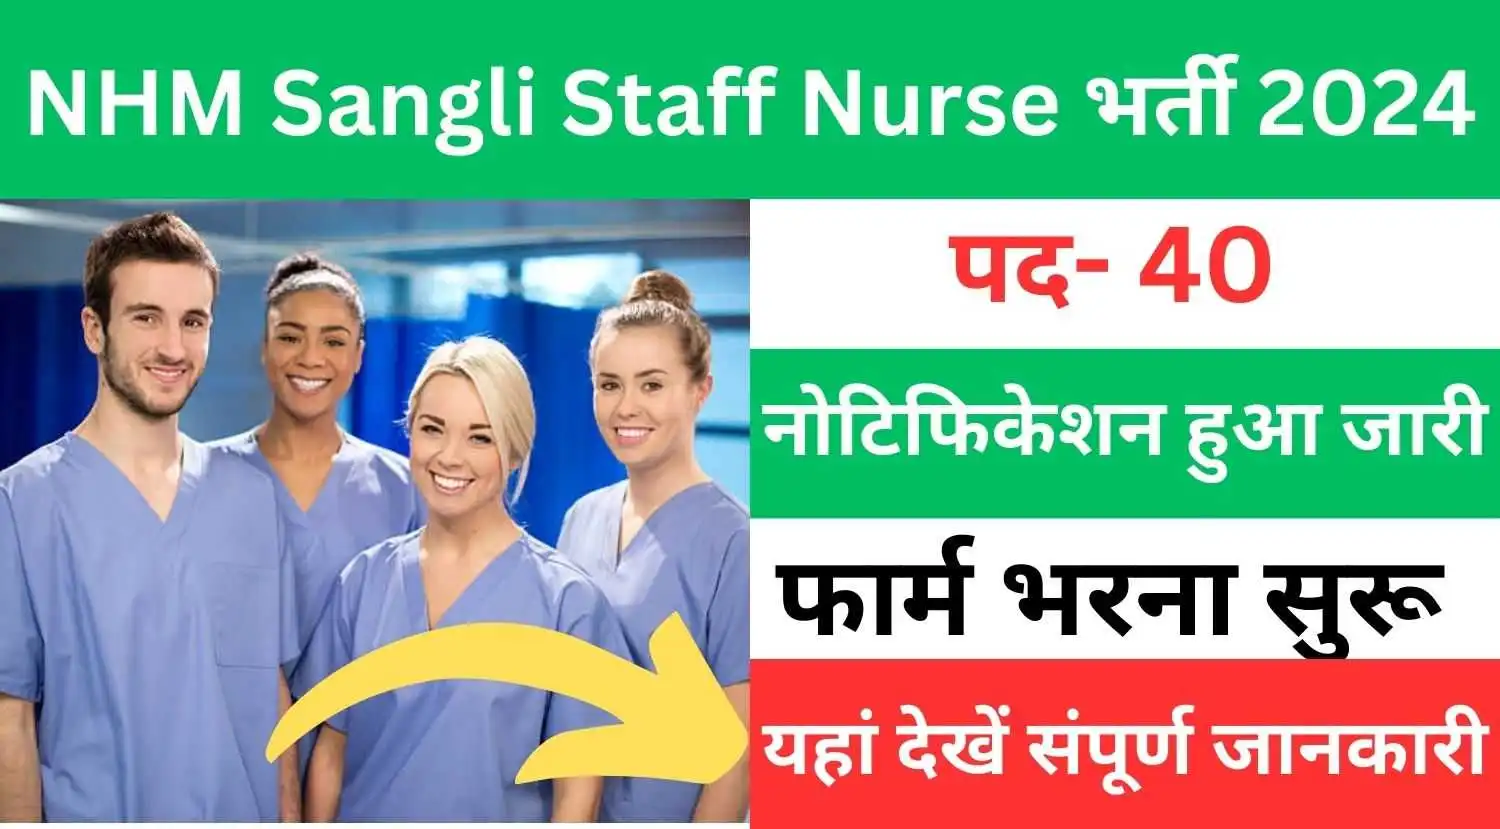 NHM Sangli Staff Nurse Recruitment 2024